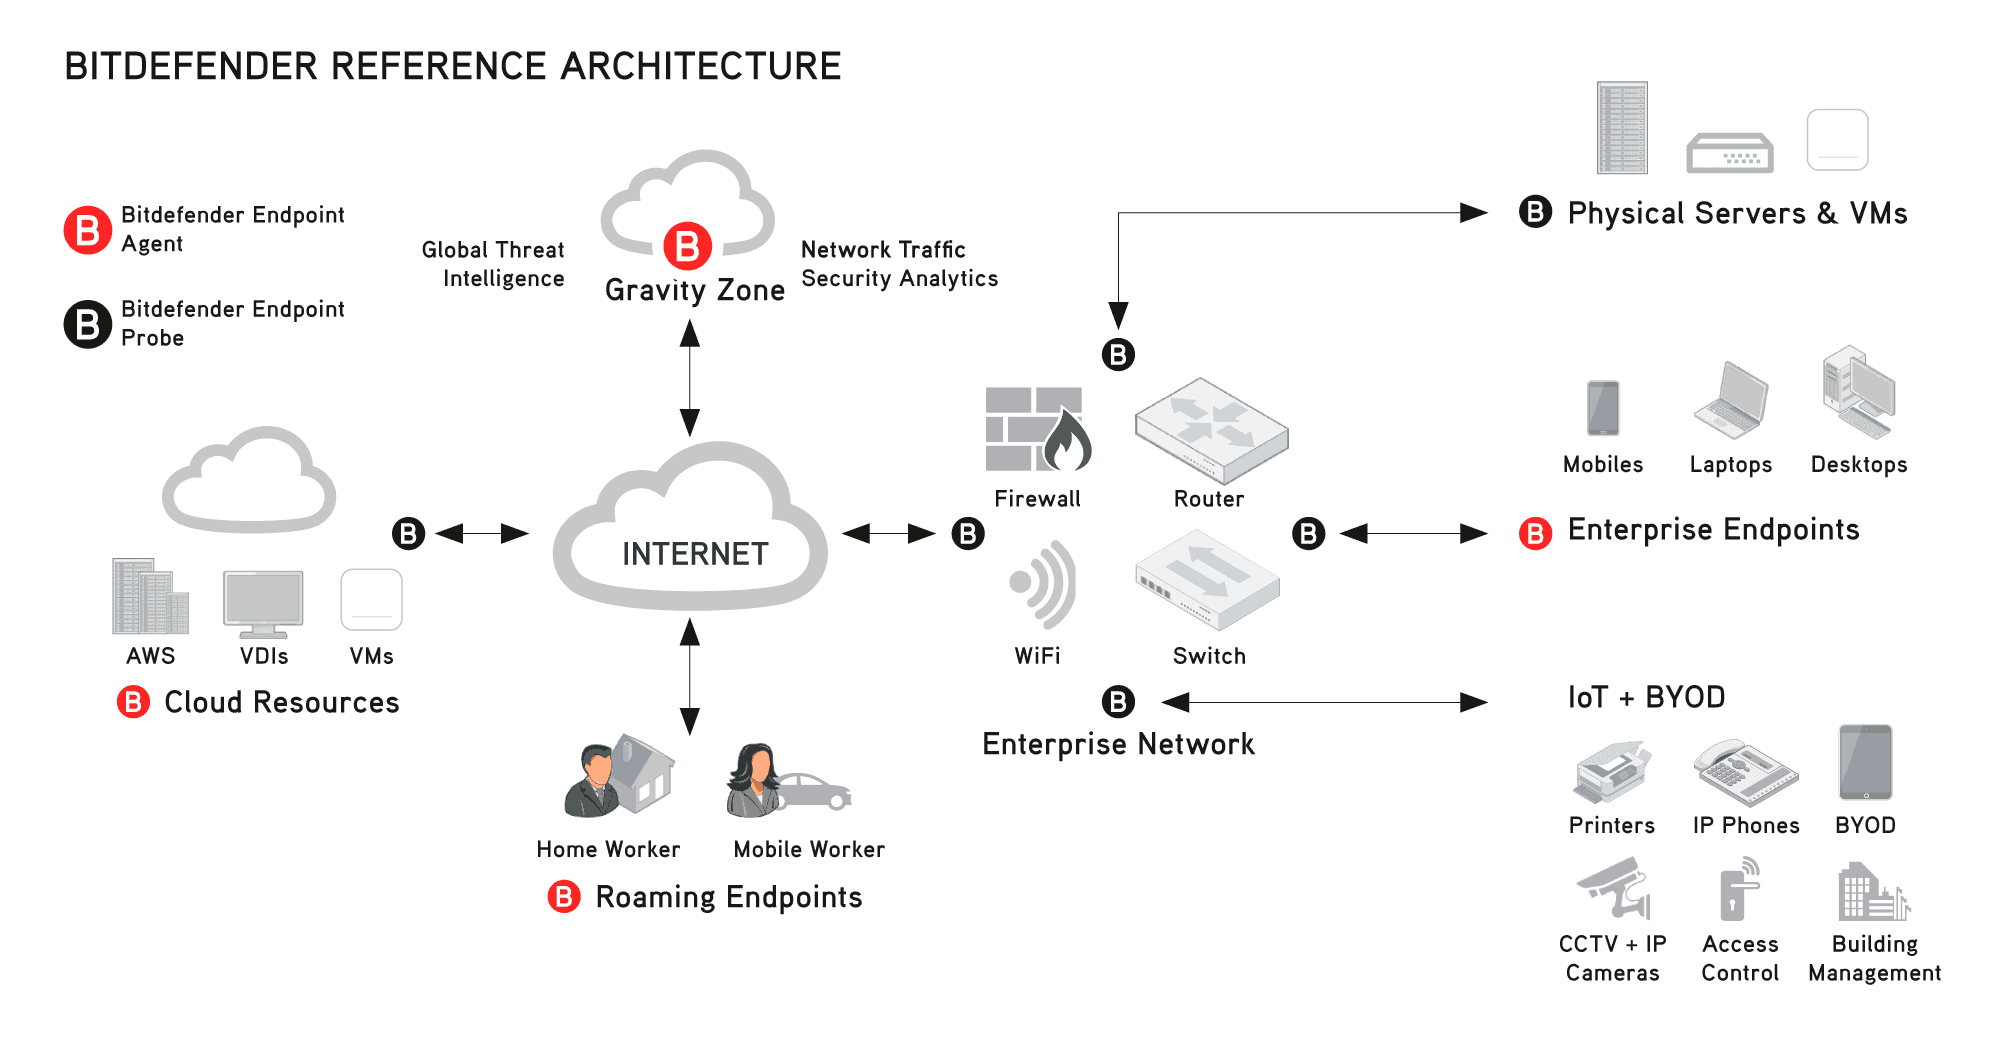 Bitdefender Reference Architecture diagram